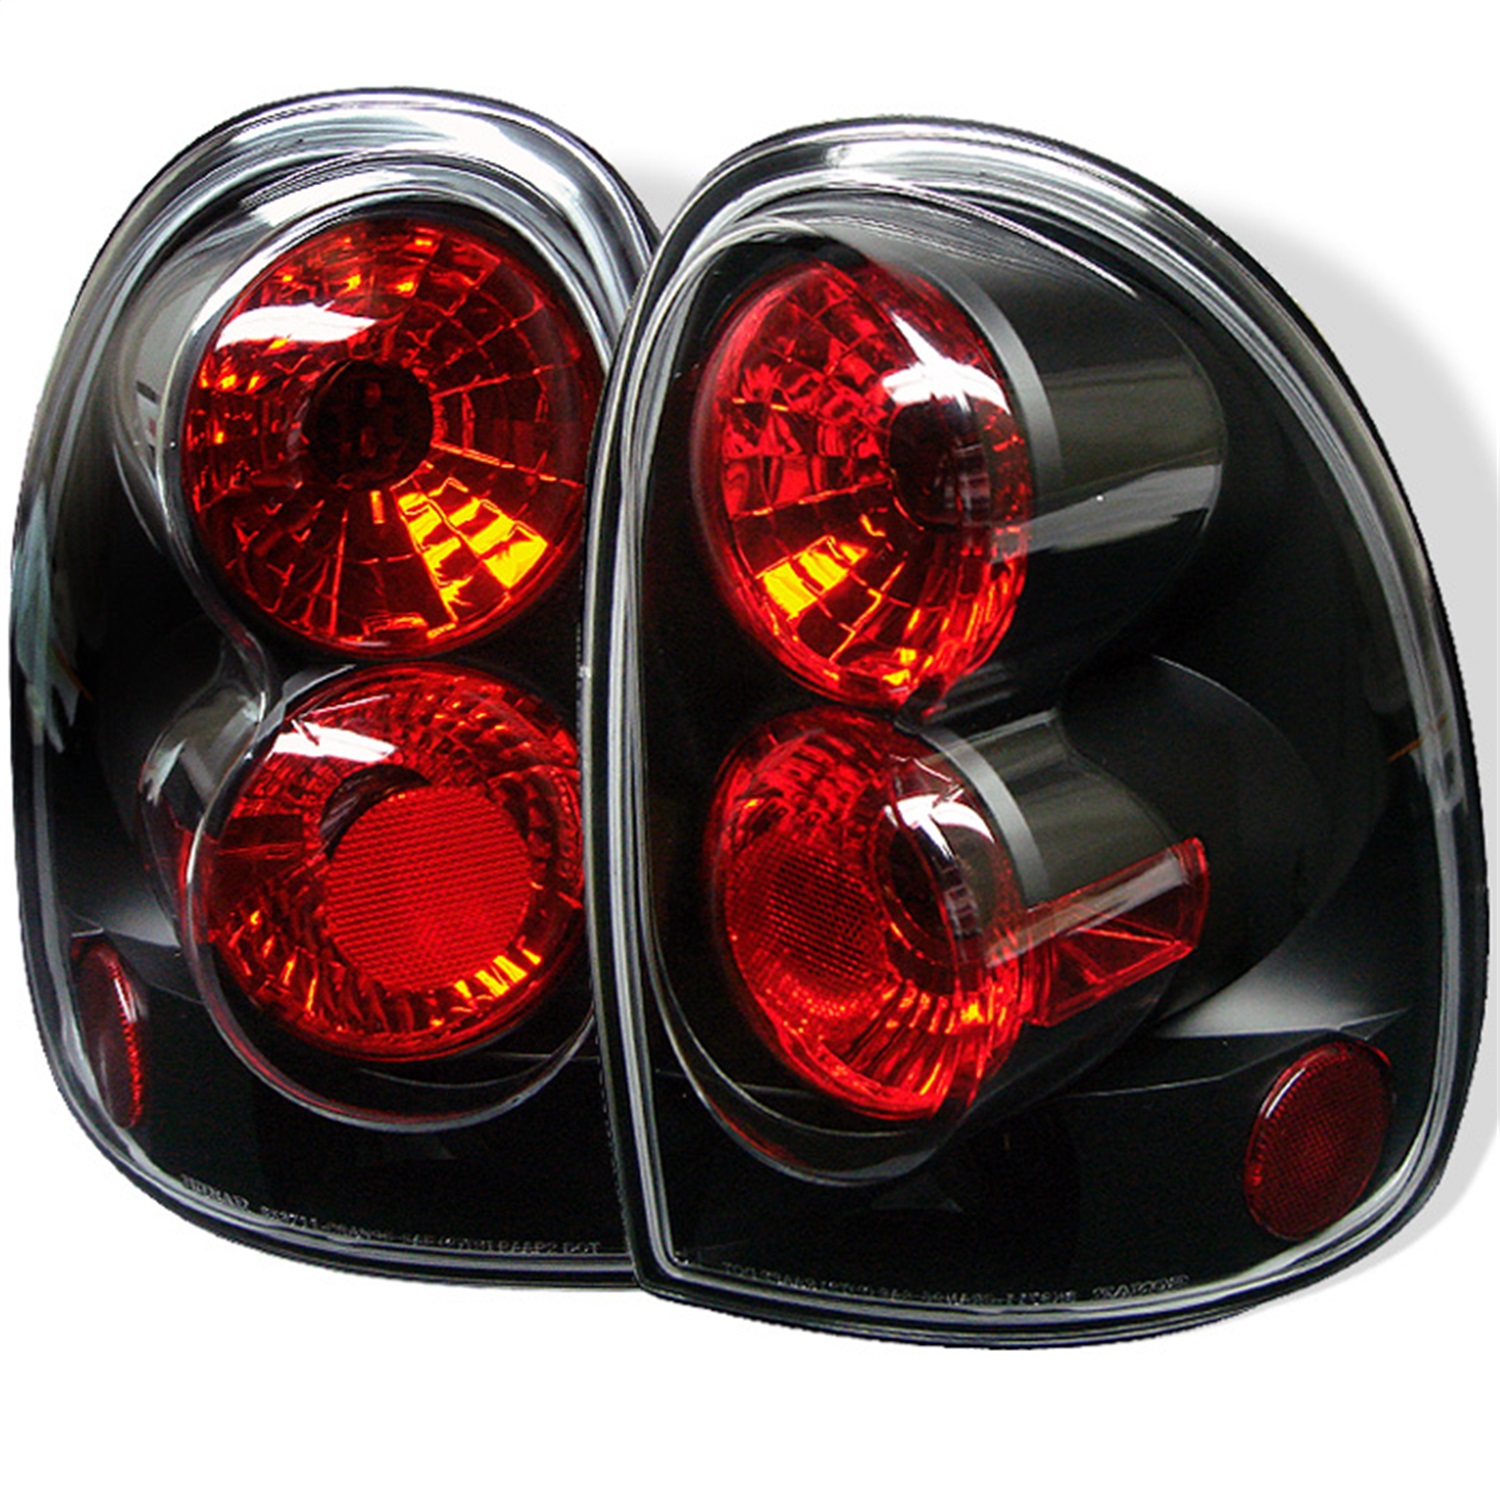 Spyder Auto 5002235 Euro Style Tail Lights